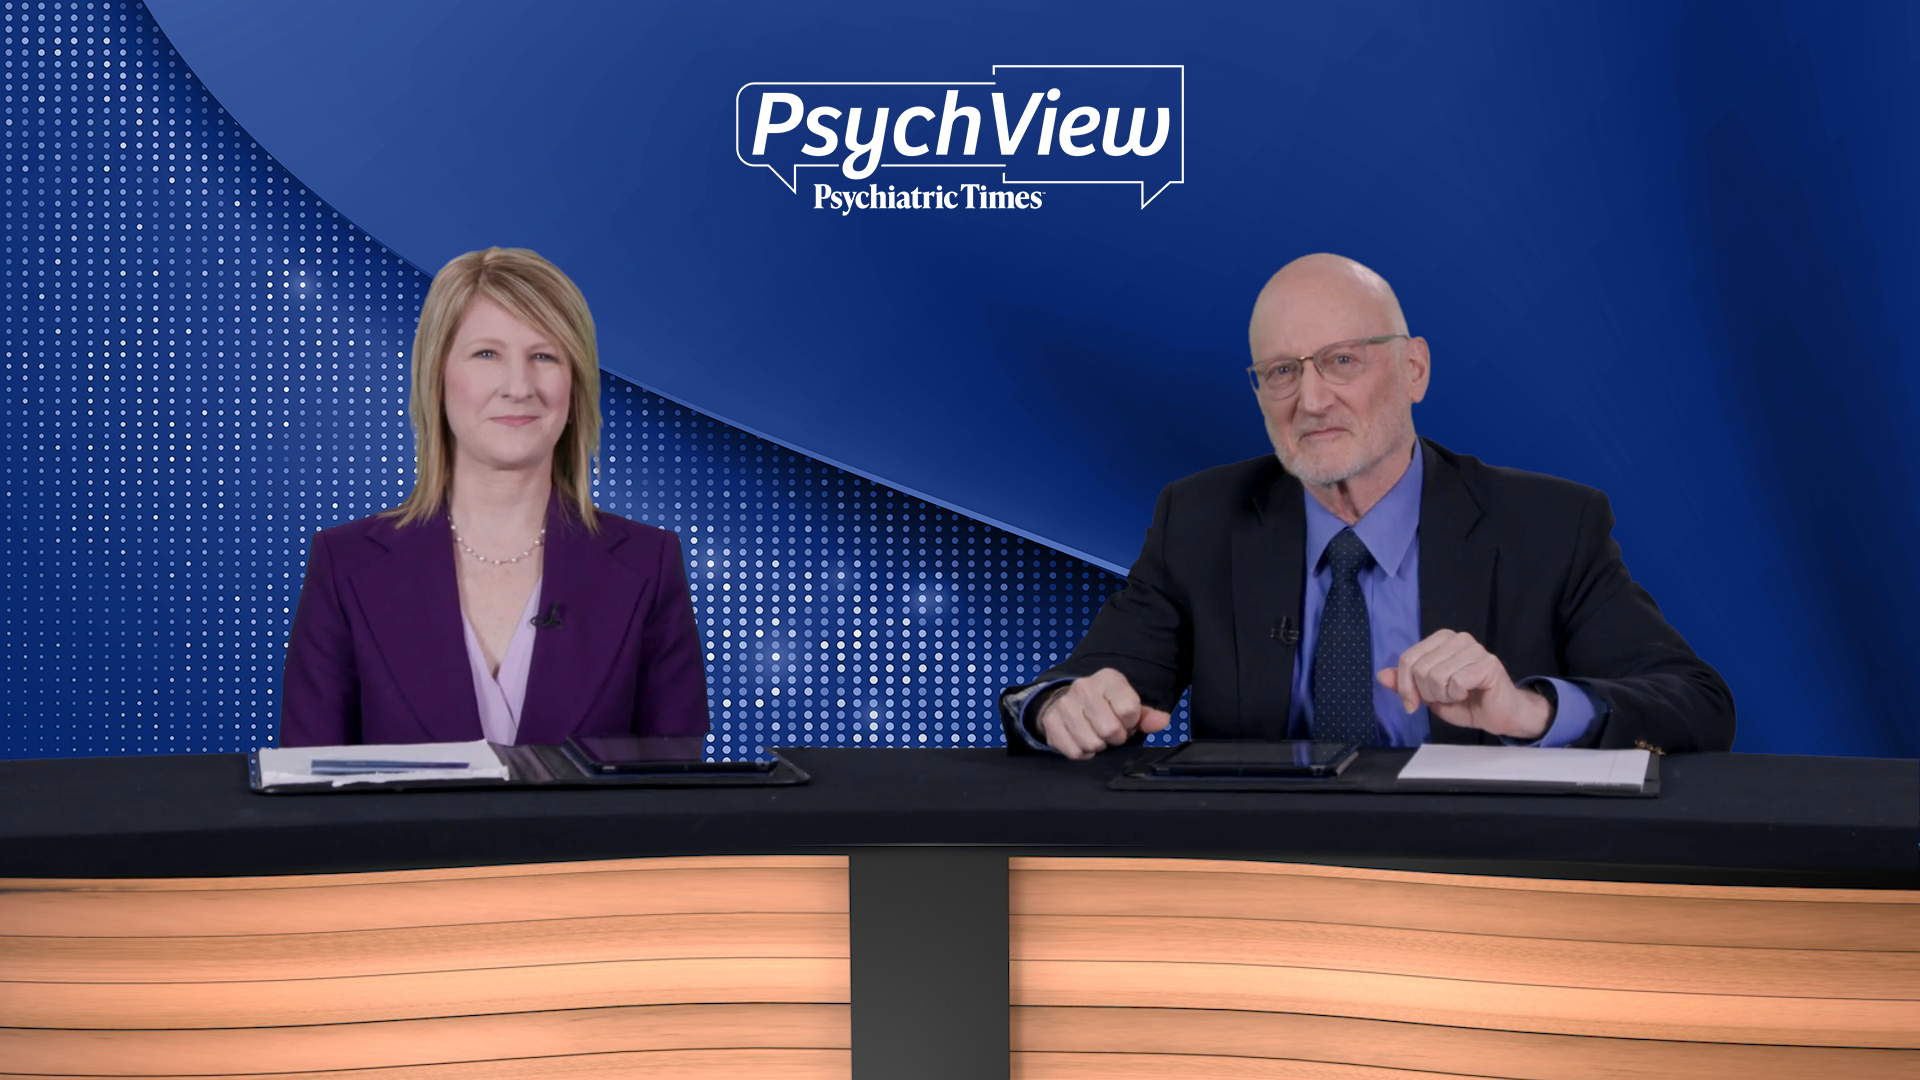 Video 6 - "Future Perspectives on Schizophrenia Care"